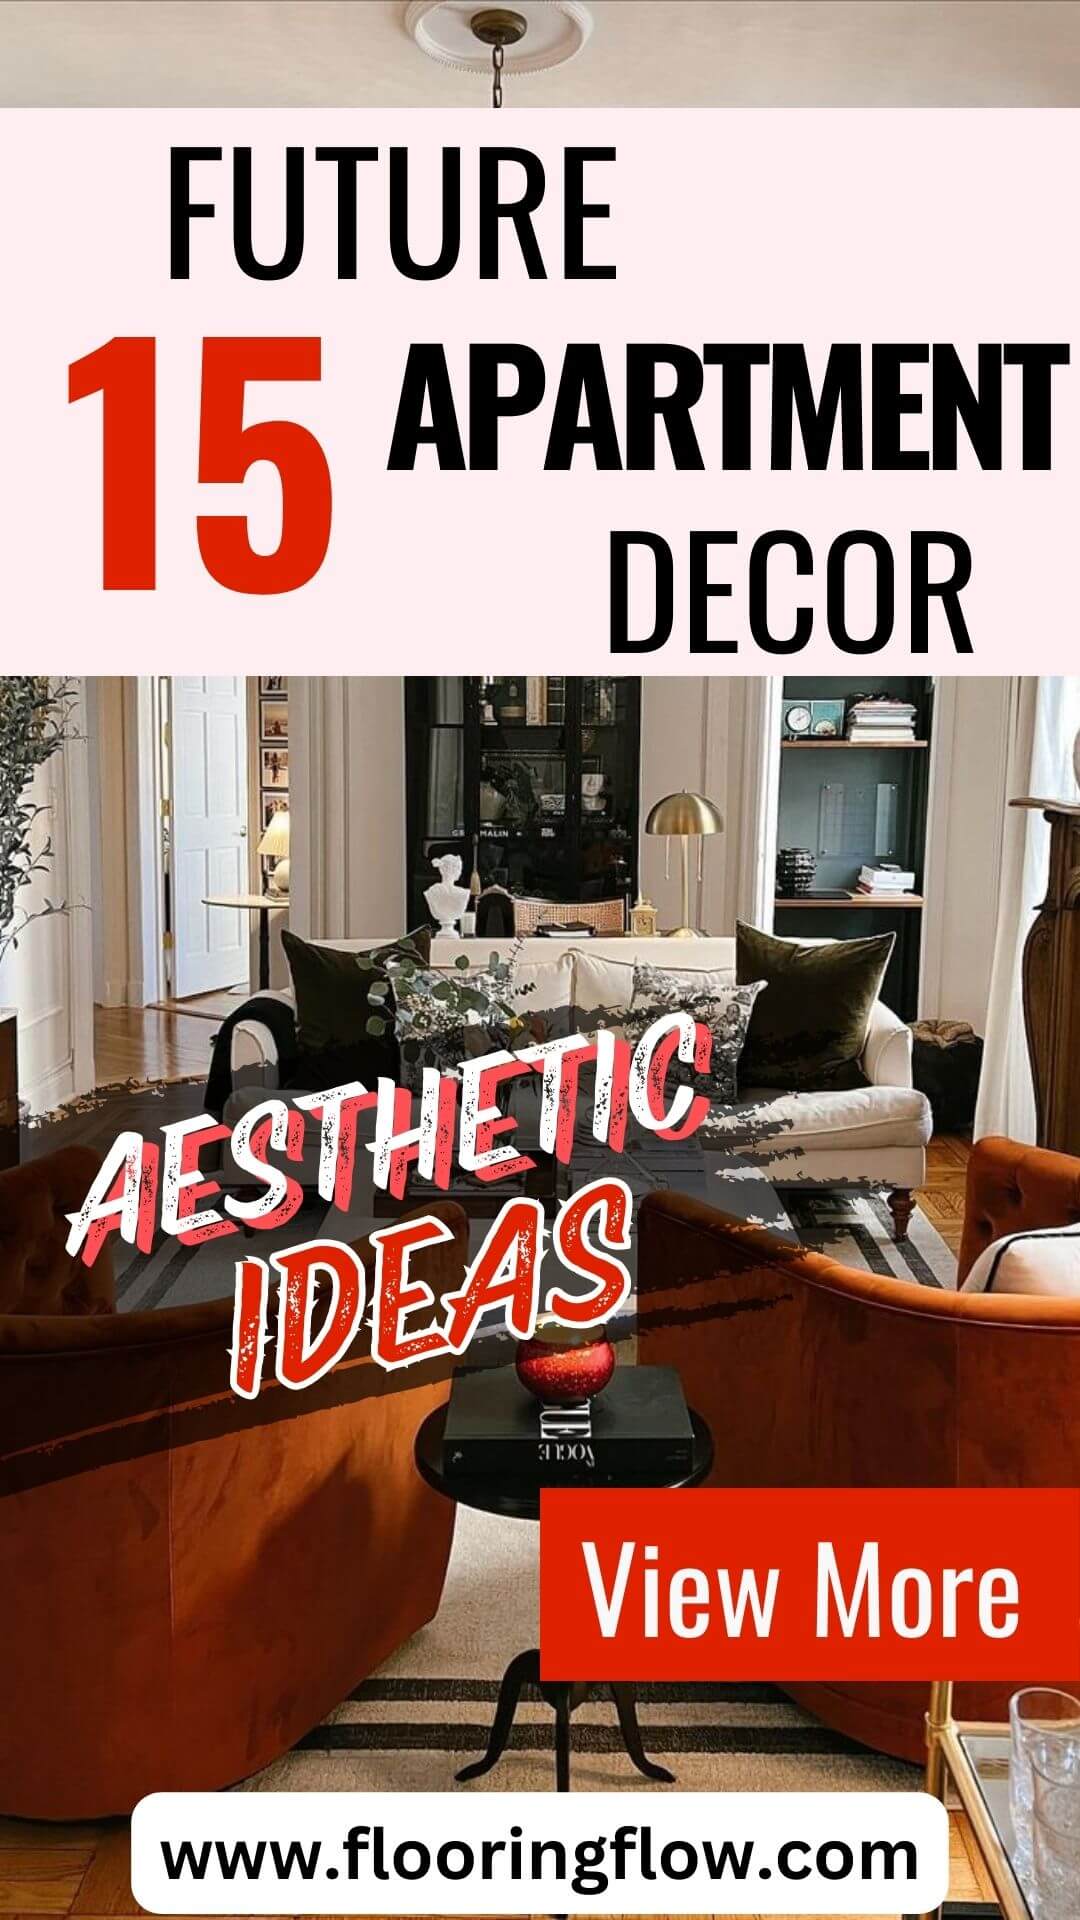 Aesthetic ideas for future apartment decor